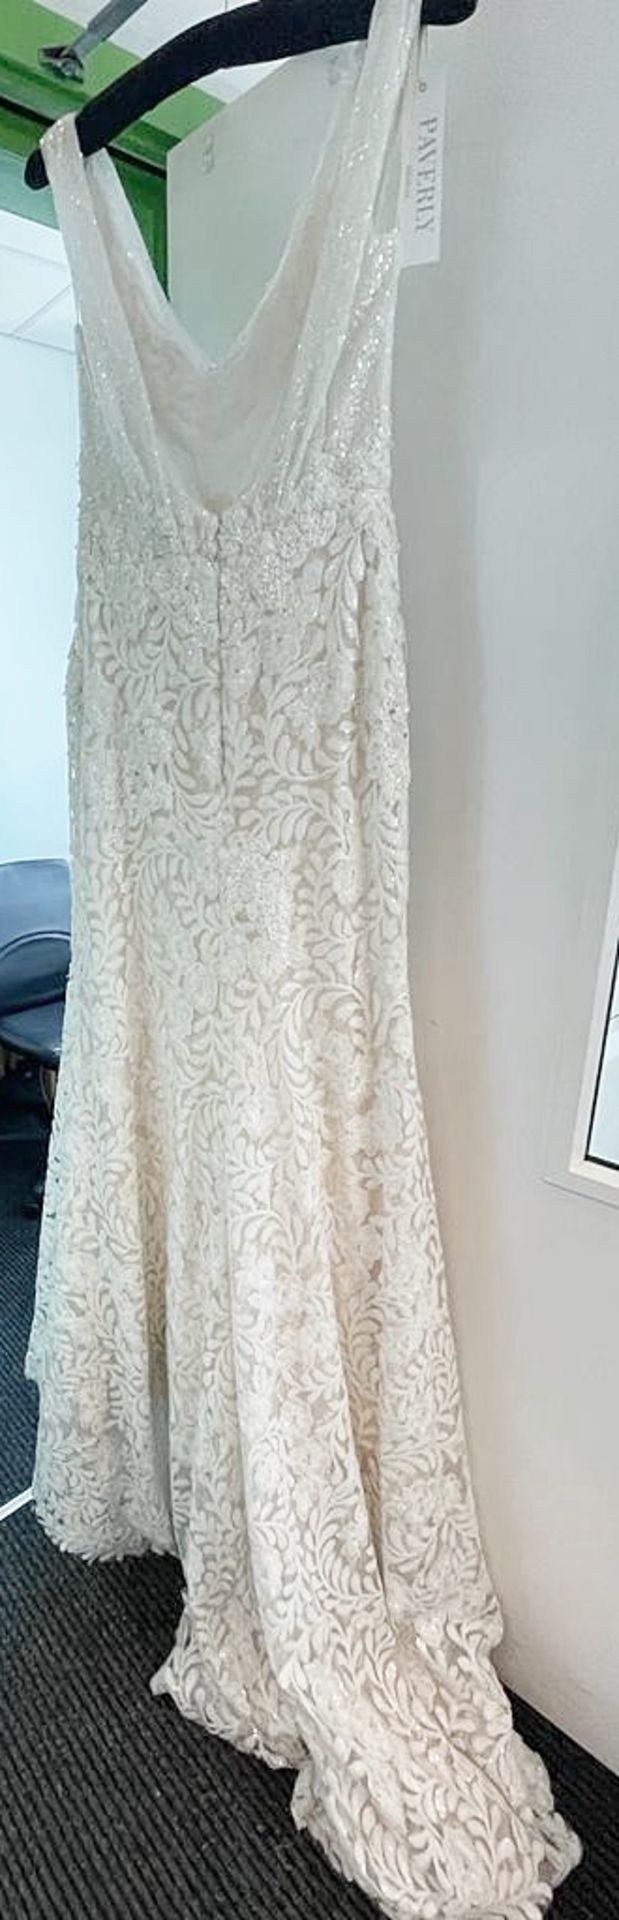 1 x LUSAN MANDONGUS 'Viola' Designer, Fishtail Wedding Dress Bridal Gown With Sequin Decoration - - Image 6 of 10